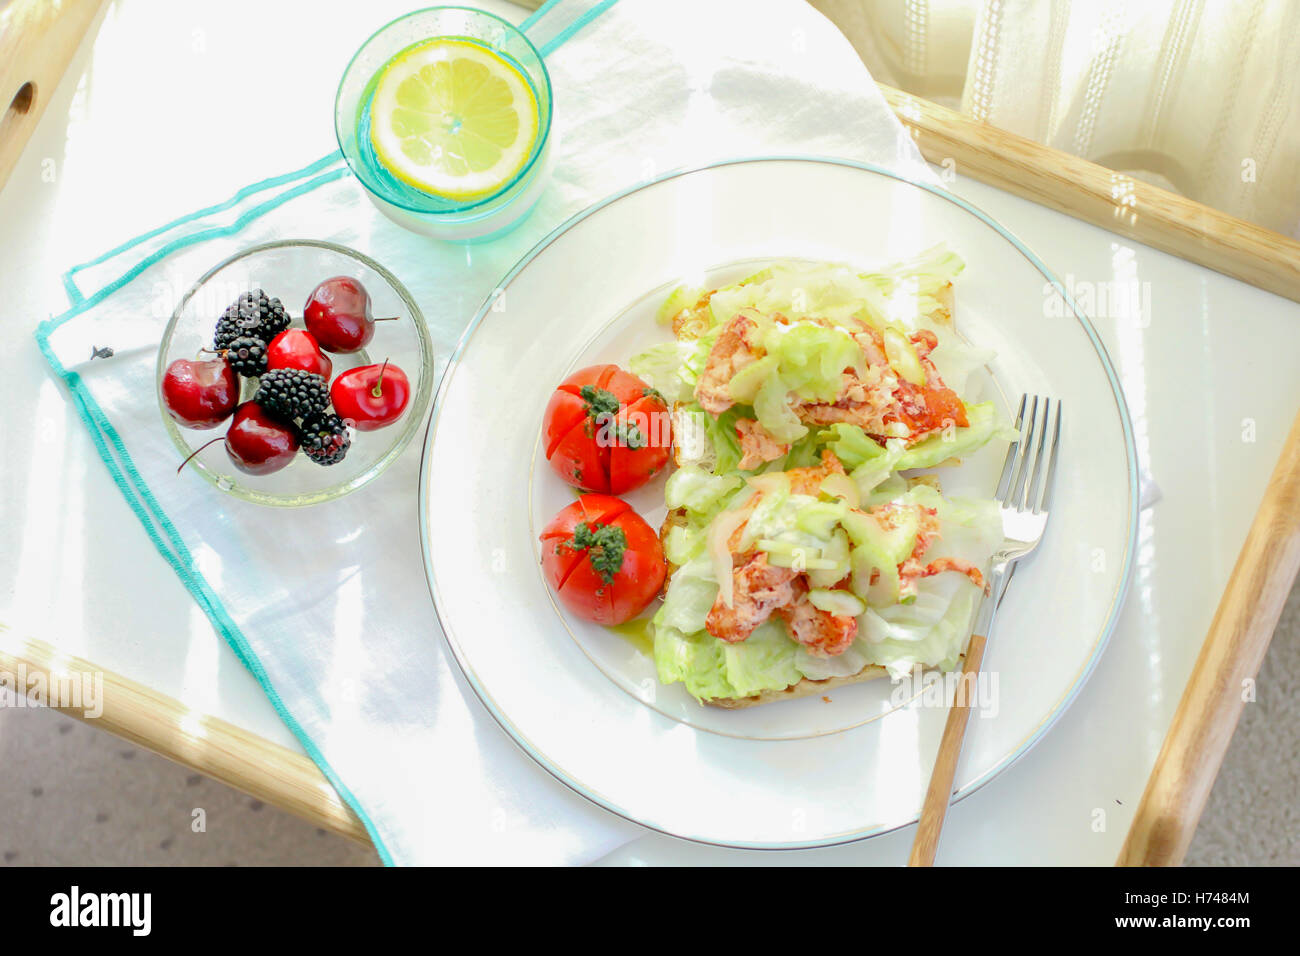 Gesunde Mahlzeit mit Tomatensalat, Himbeere und Limonade Stockfoto